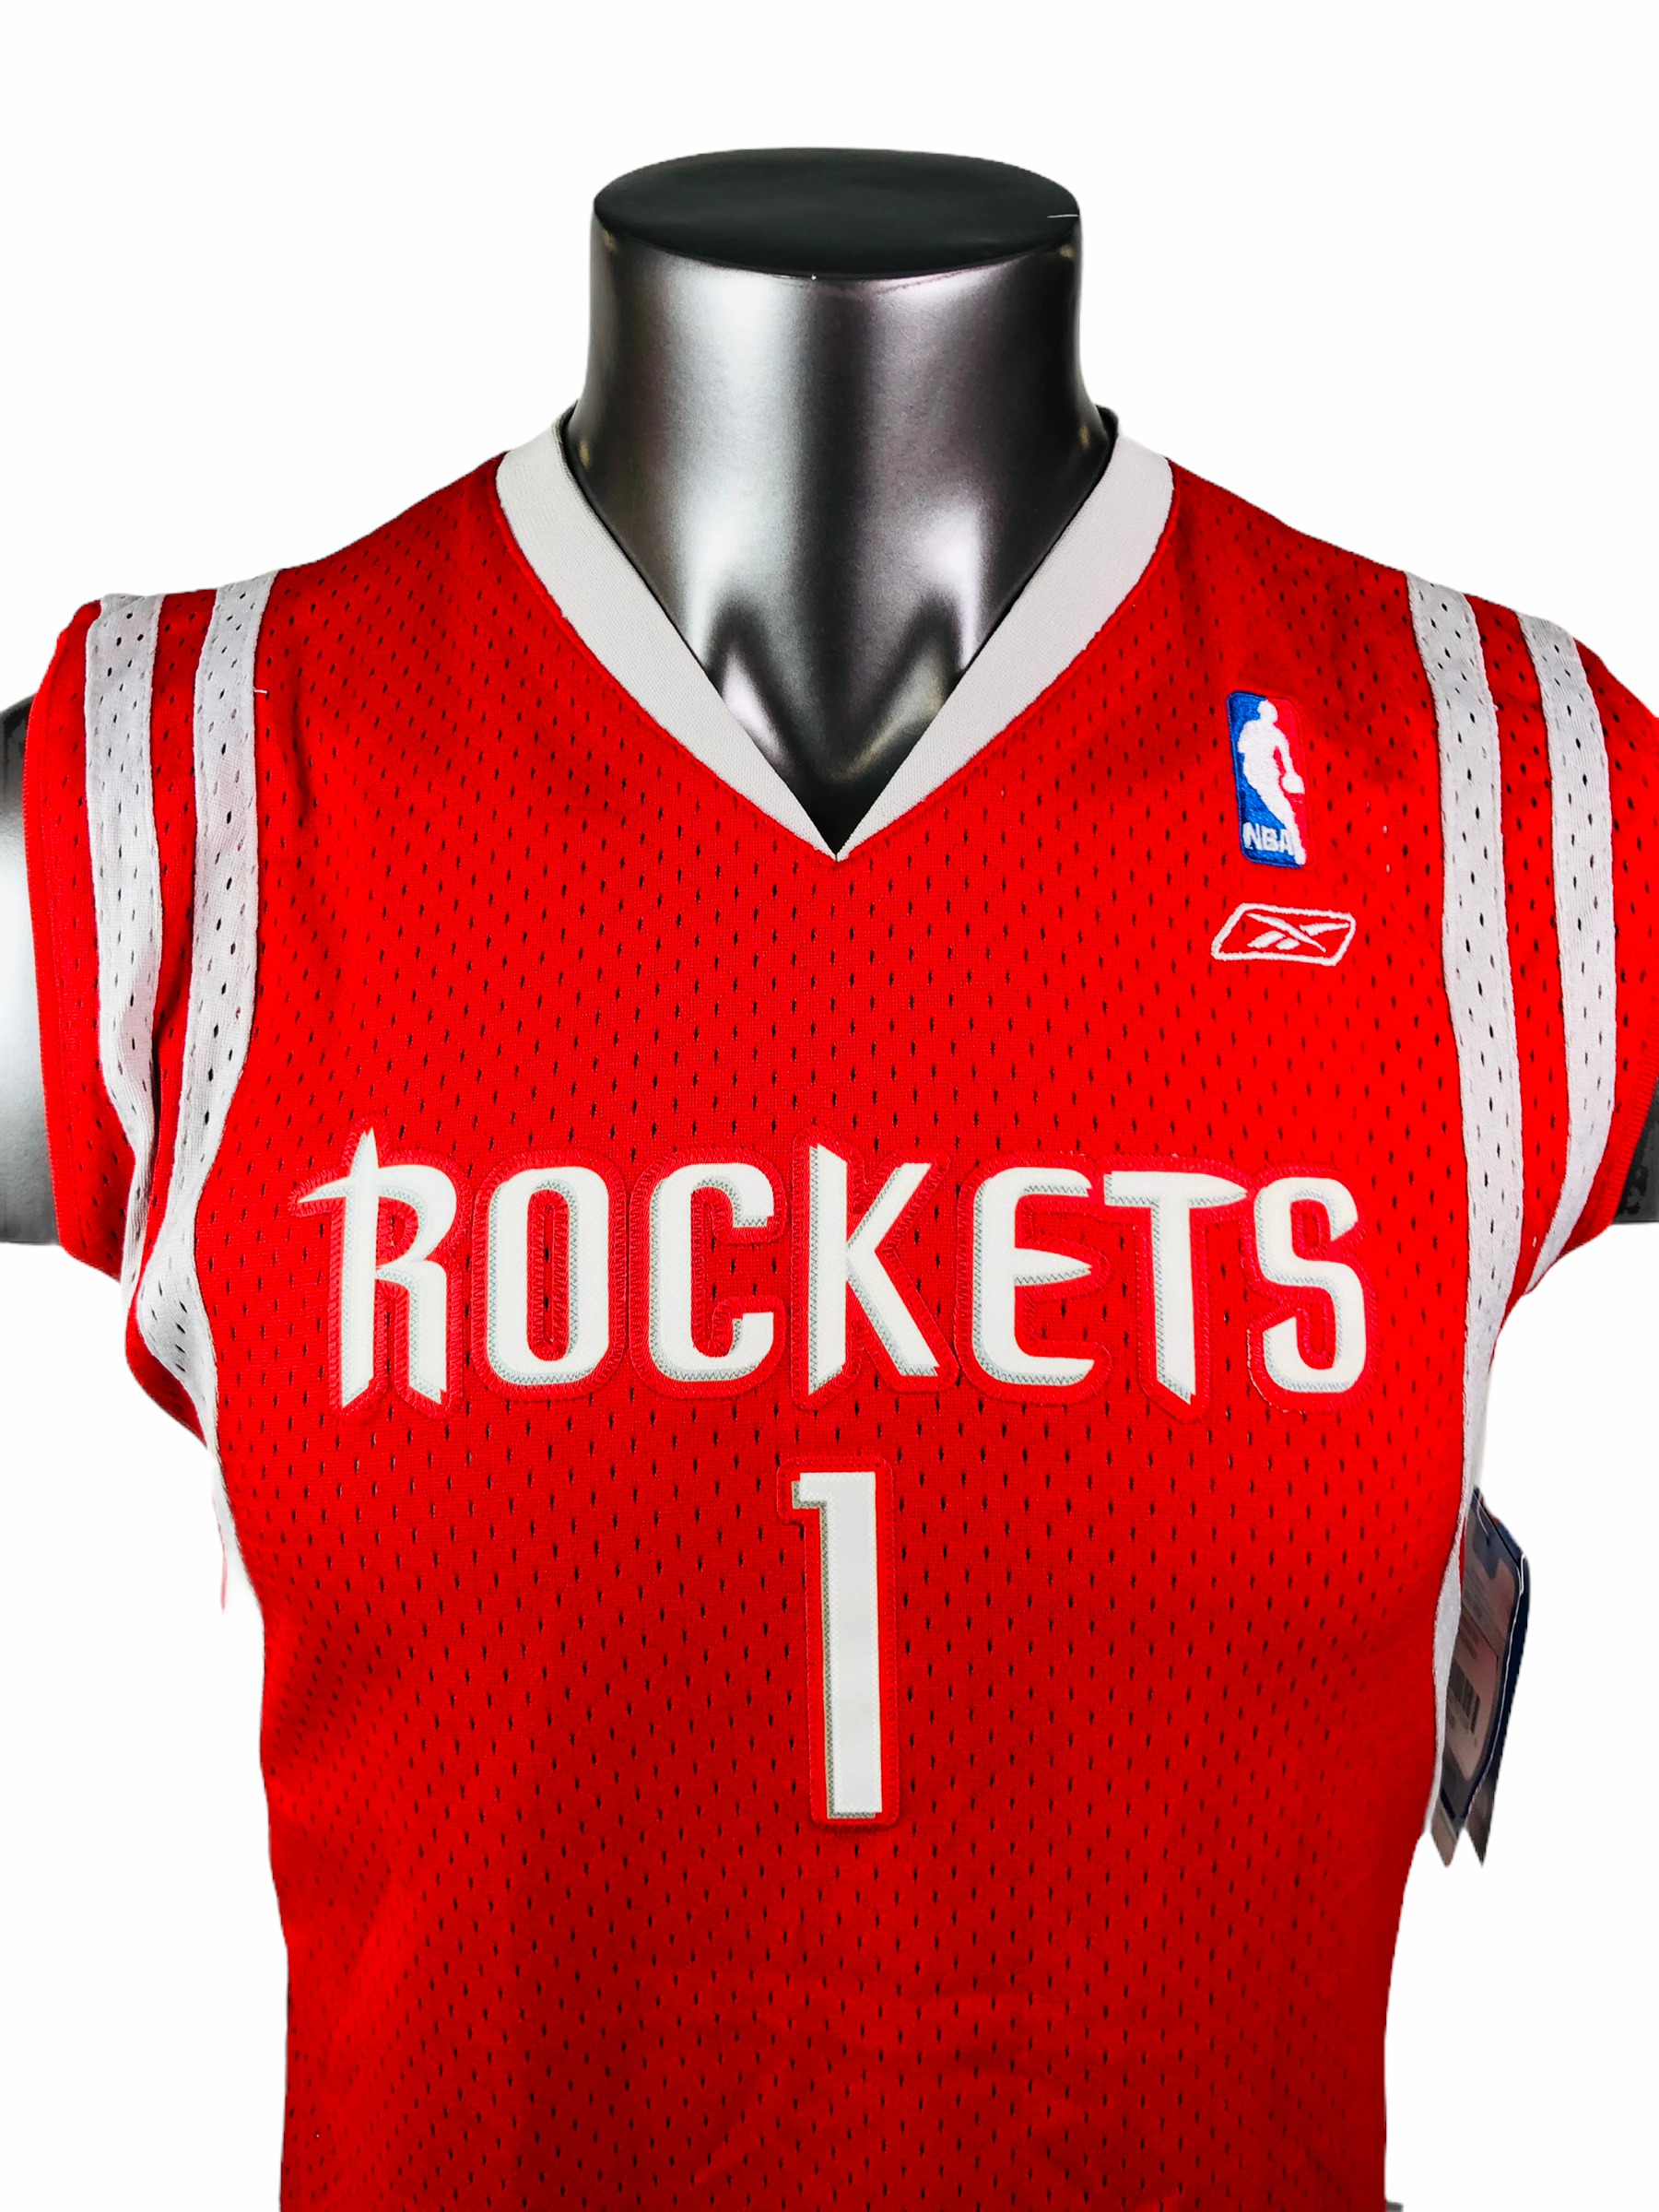 Houston Rockets Vintage Apparel & Jerseys